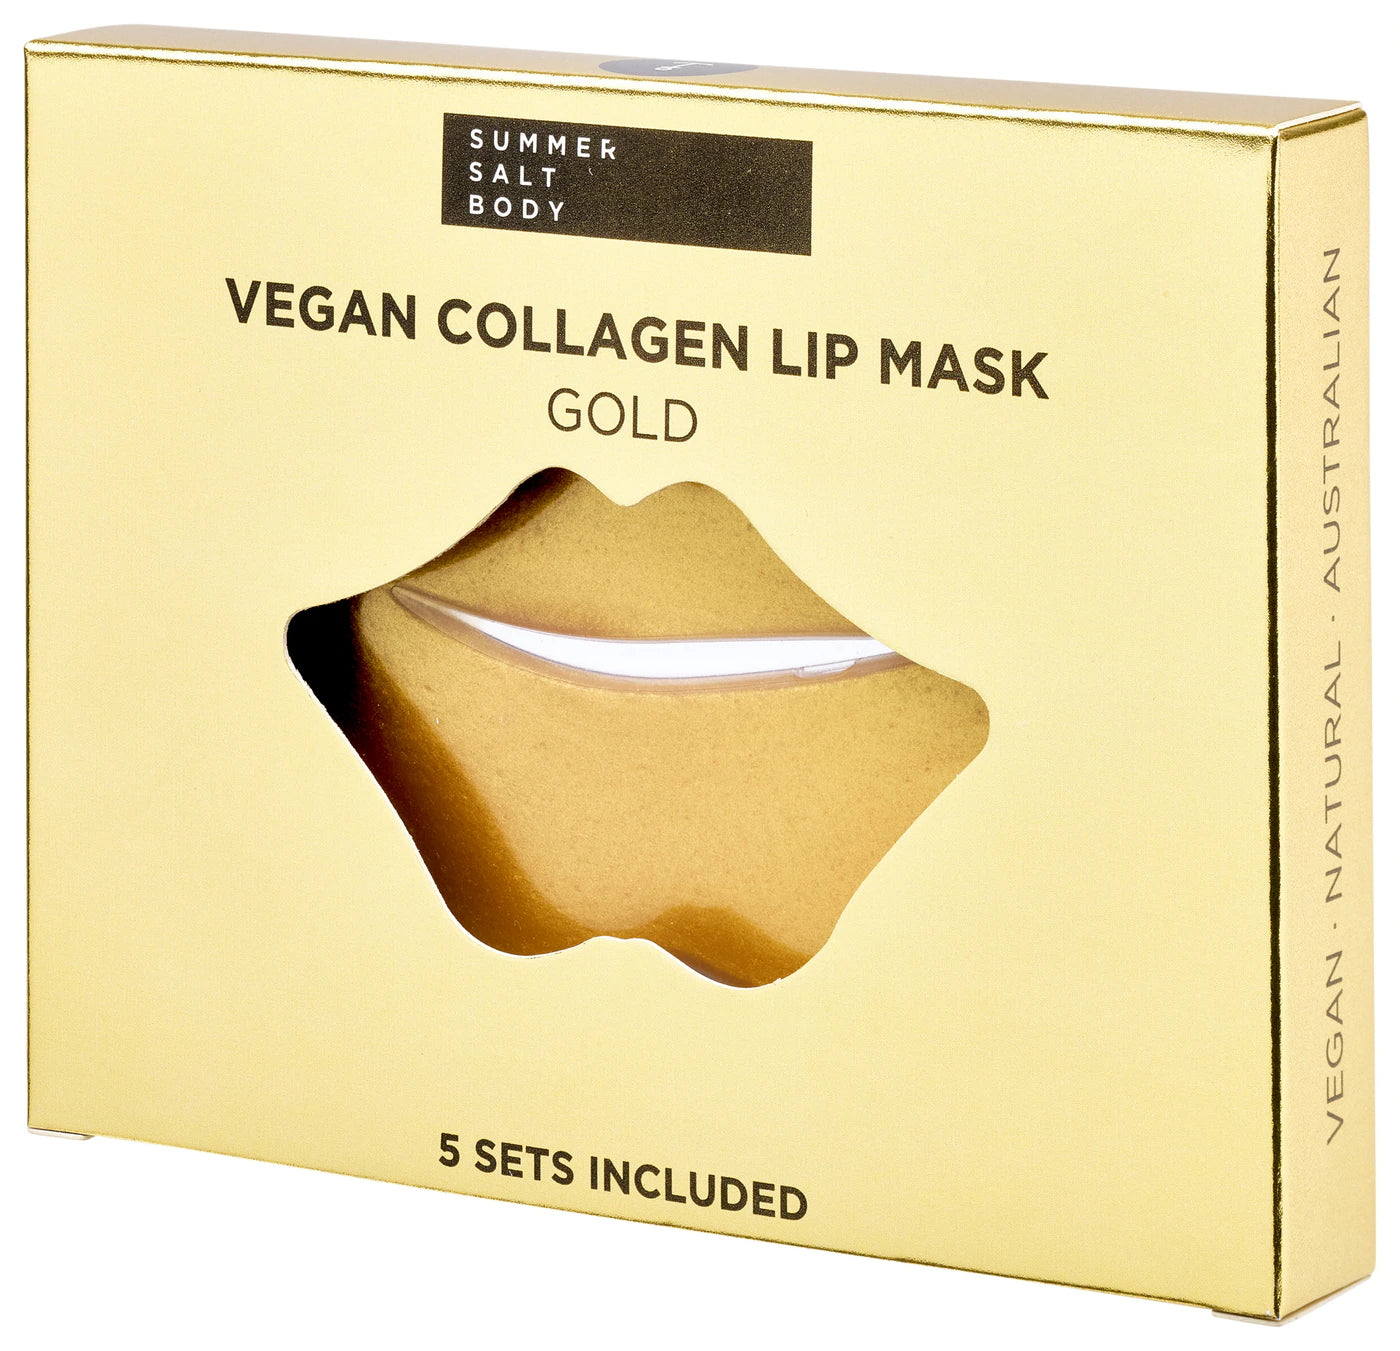 Vegan Collagen Lip Mask Gold